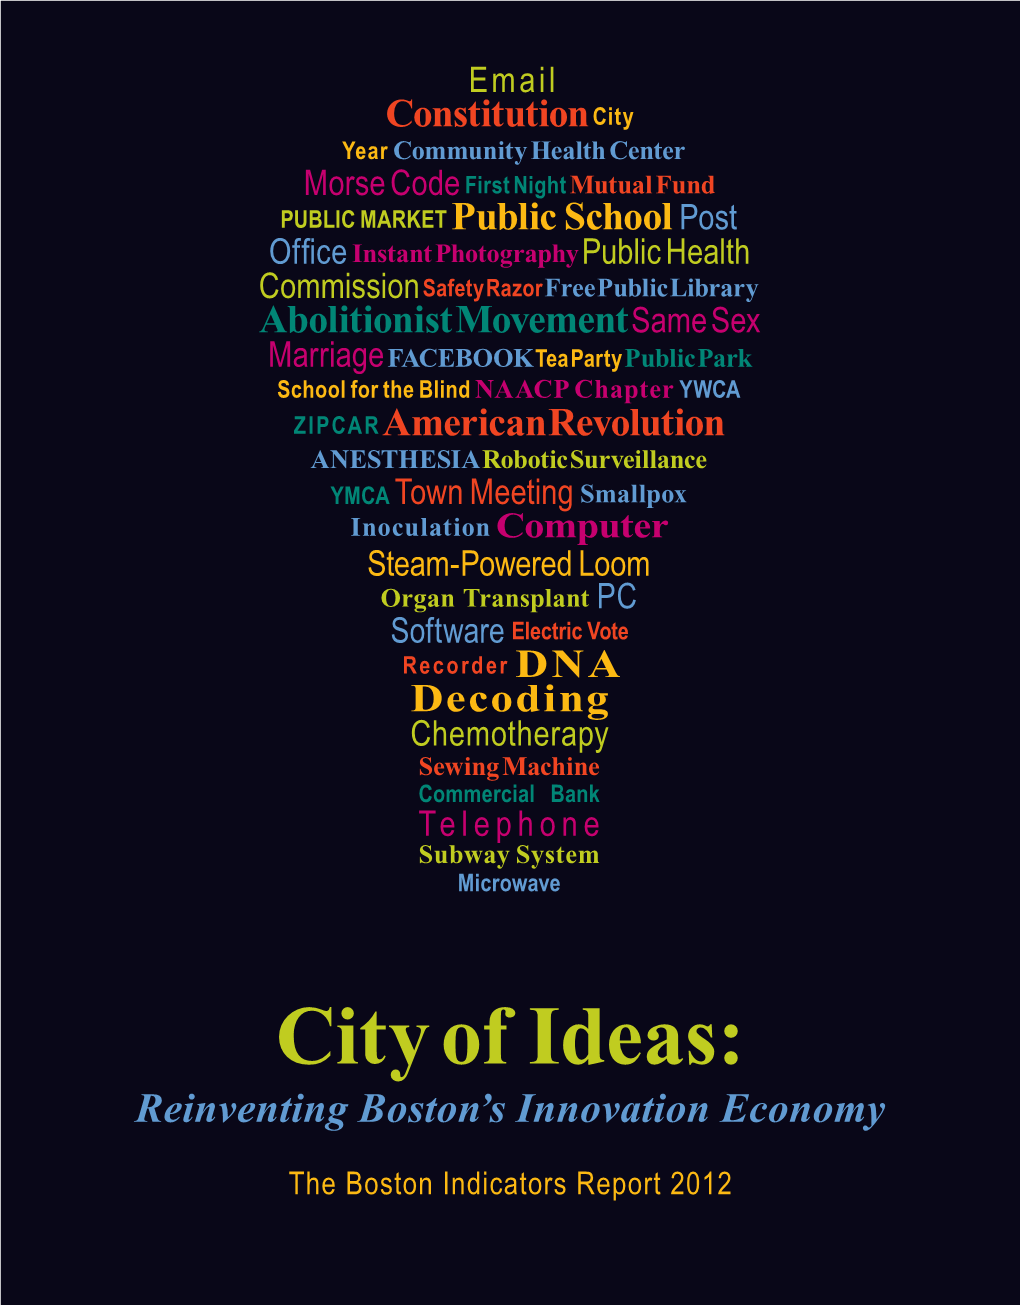 City of Ideas: Reinventing Boston's Innovation Economy